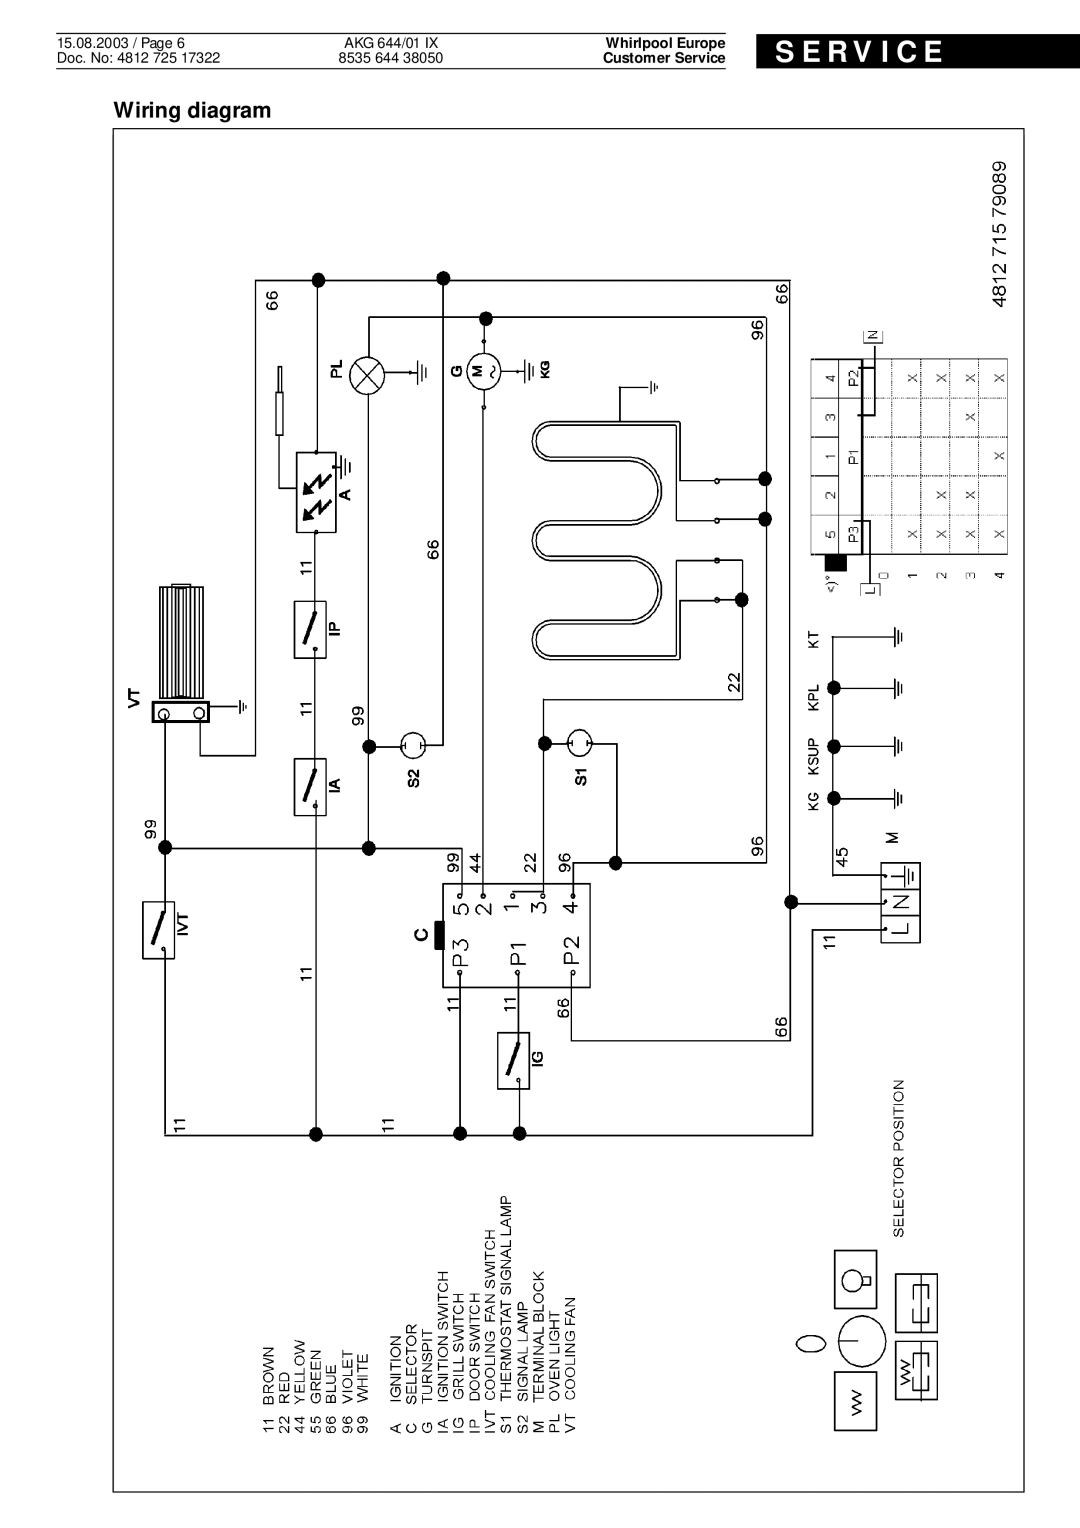 Whirlpool lx, AKG 644 1 service manual Wiring diagram, S E R V I C E, Whirlpool Europe, Customer Service 